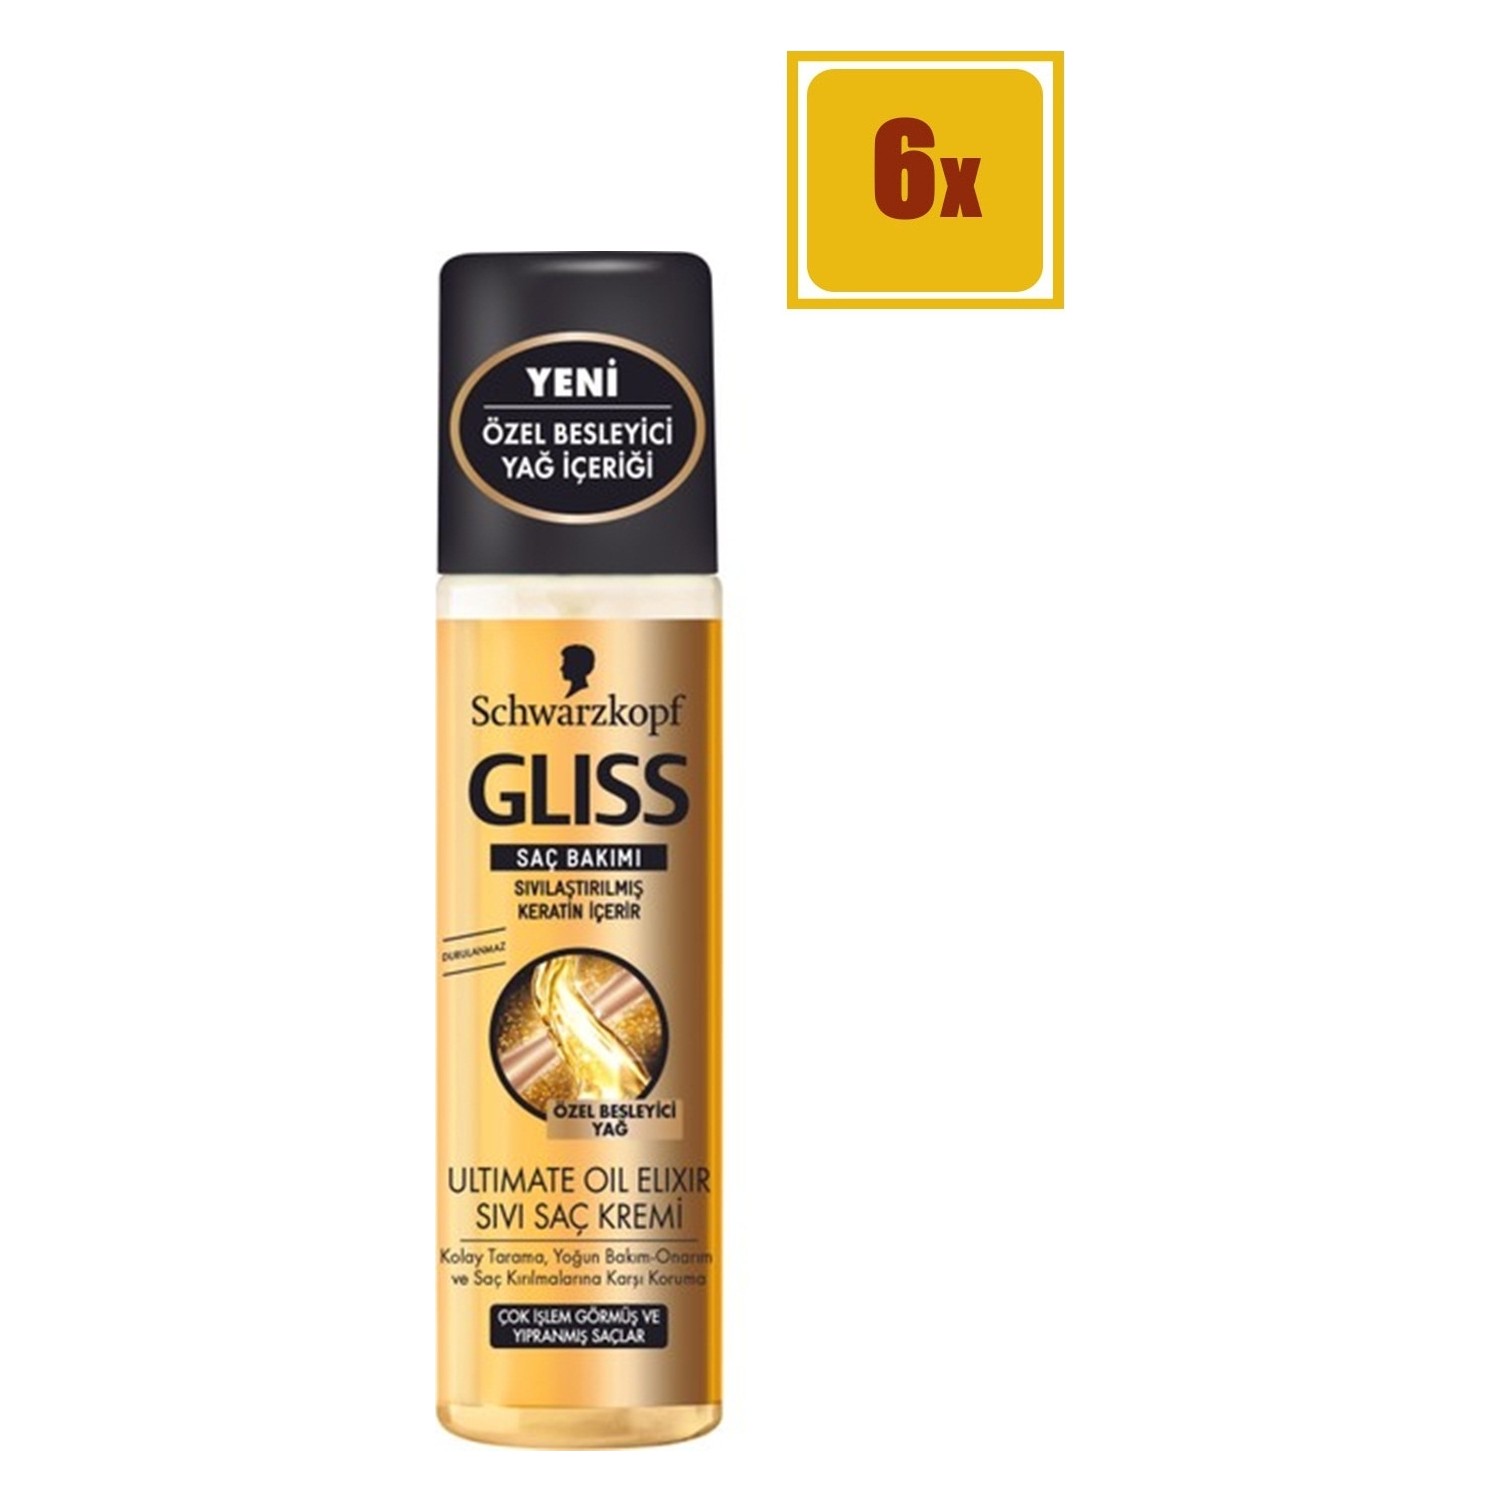 Gliss Ultimate Oil Elixir Sivi Sac Kremi 200 Ml 6 Li Set Fiyati